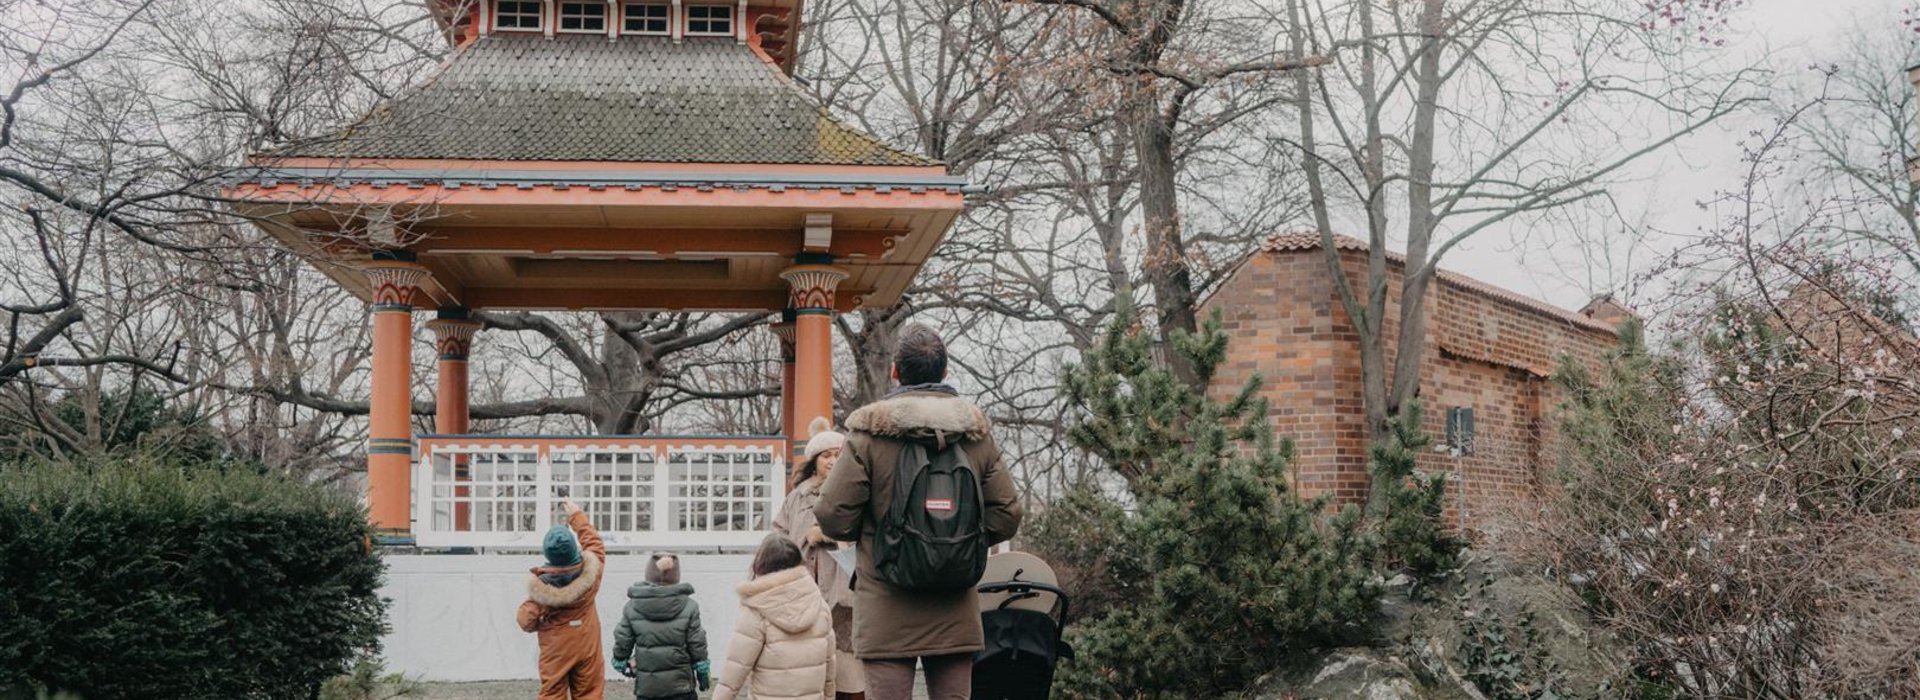 Familie schaut sich chinesisch anmutende Pagode in Cottbus an